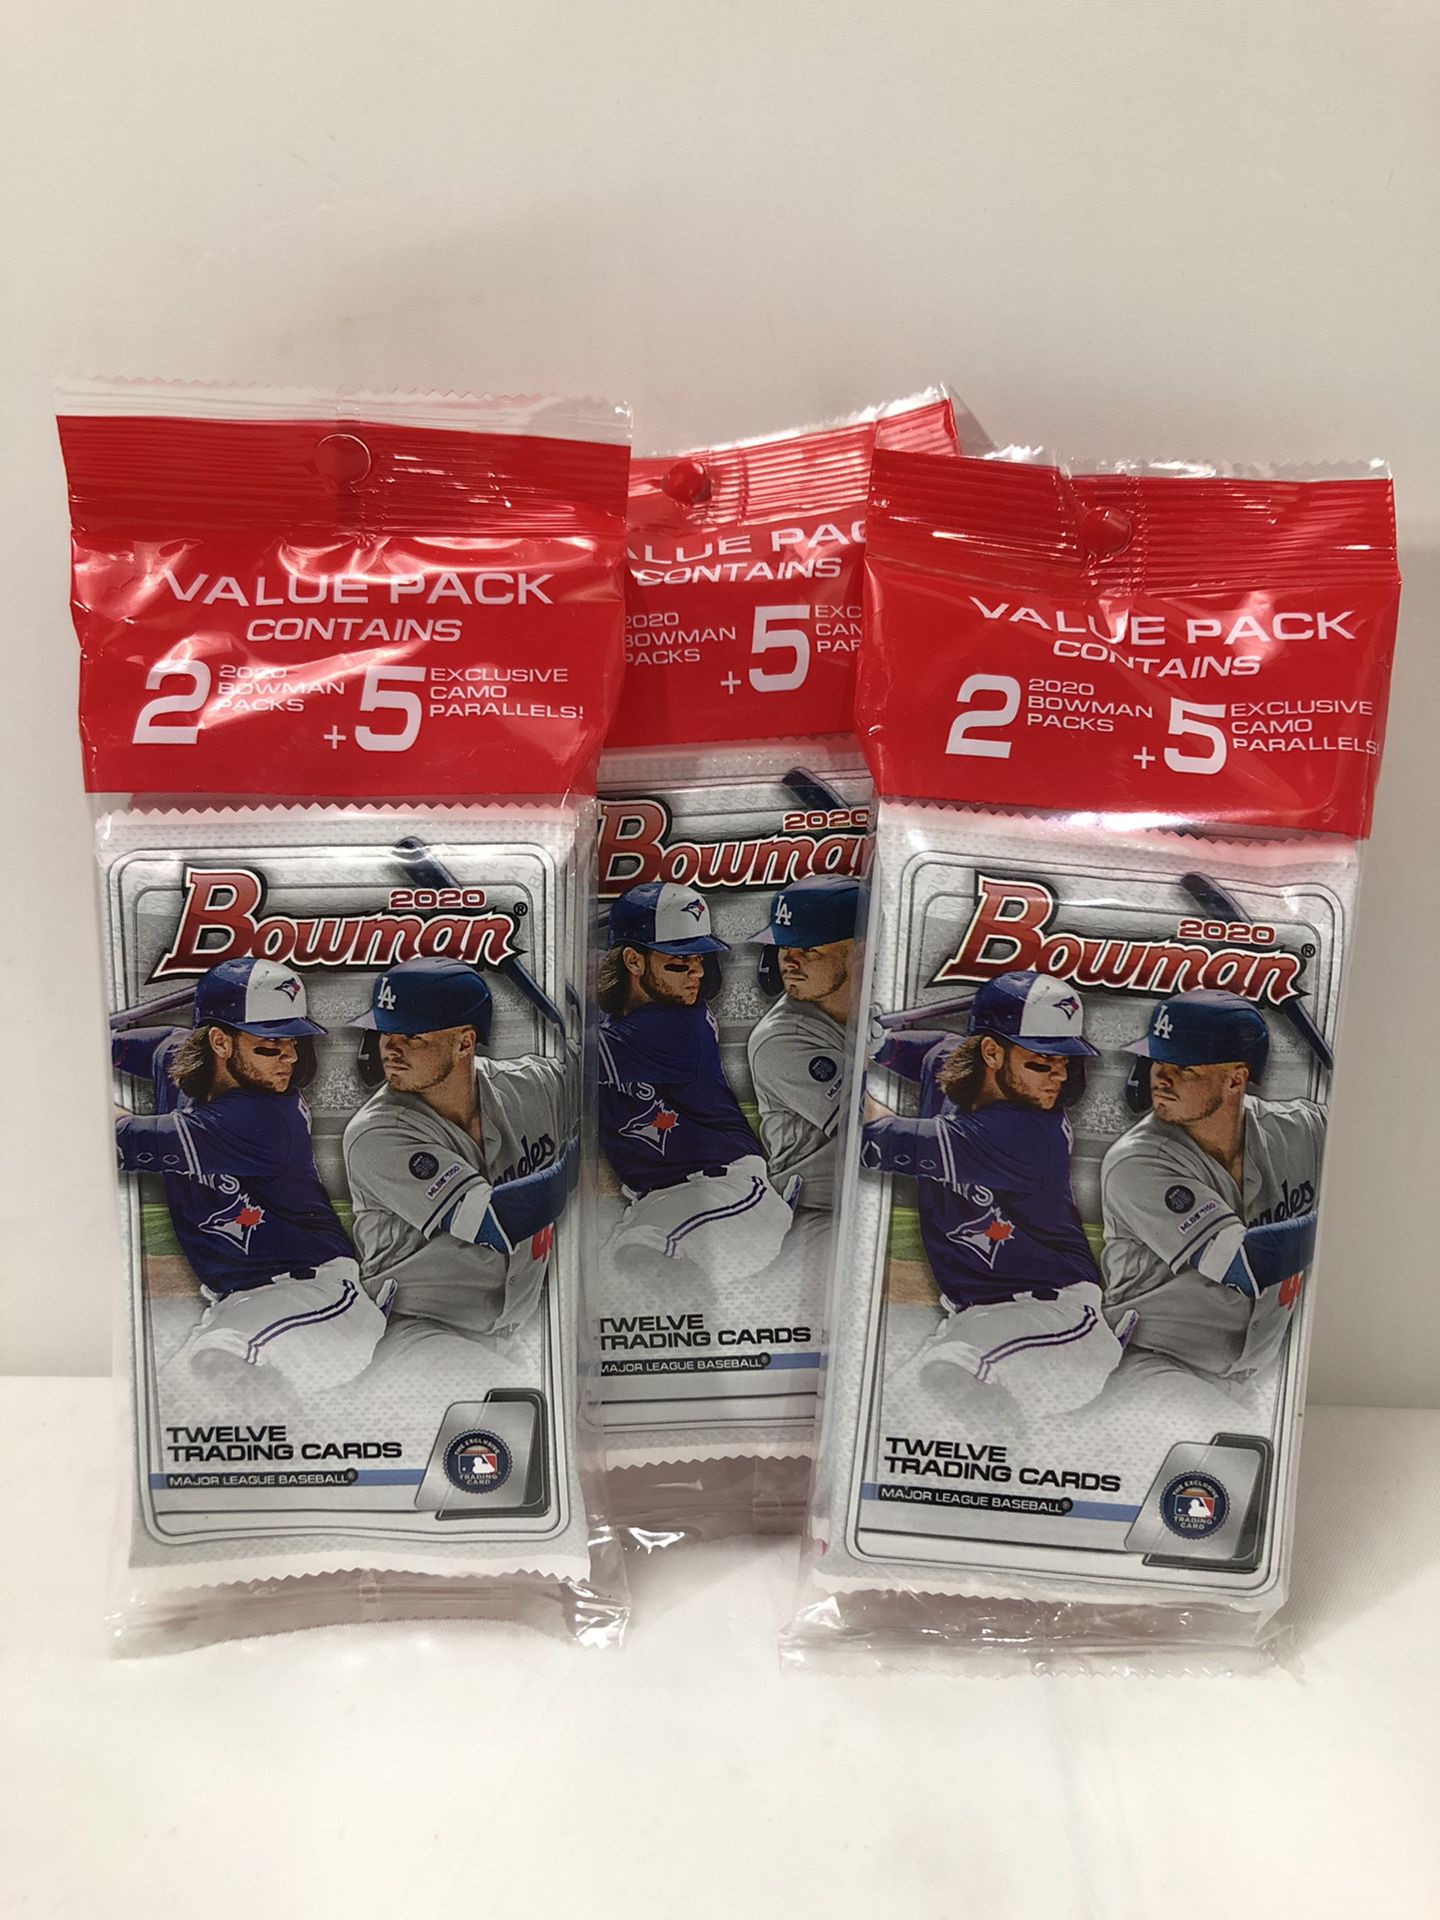 Lot of 3 cello / value packs Topps MLB baseball cards 2020 Bowman cards